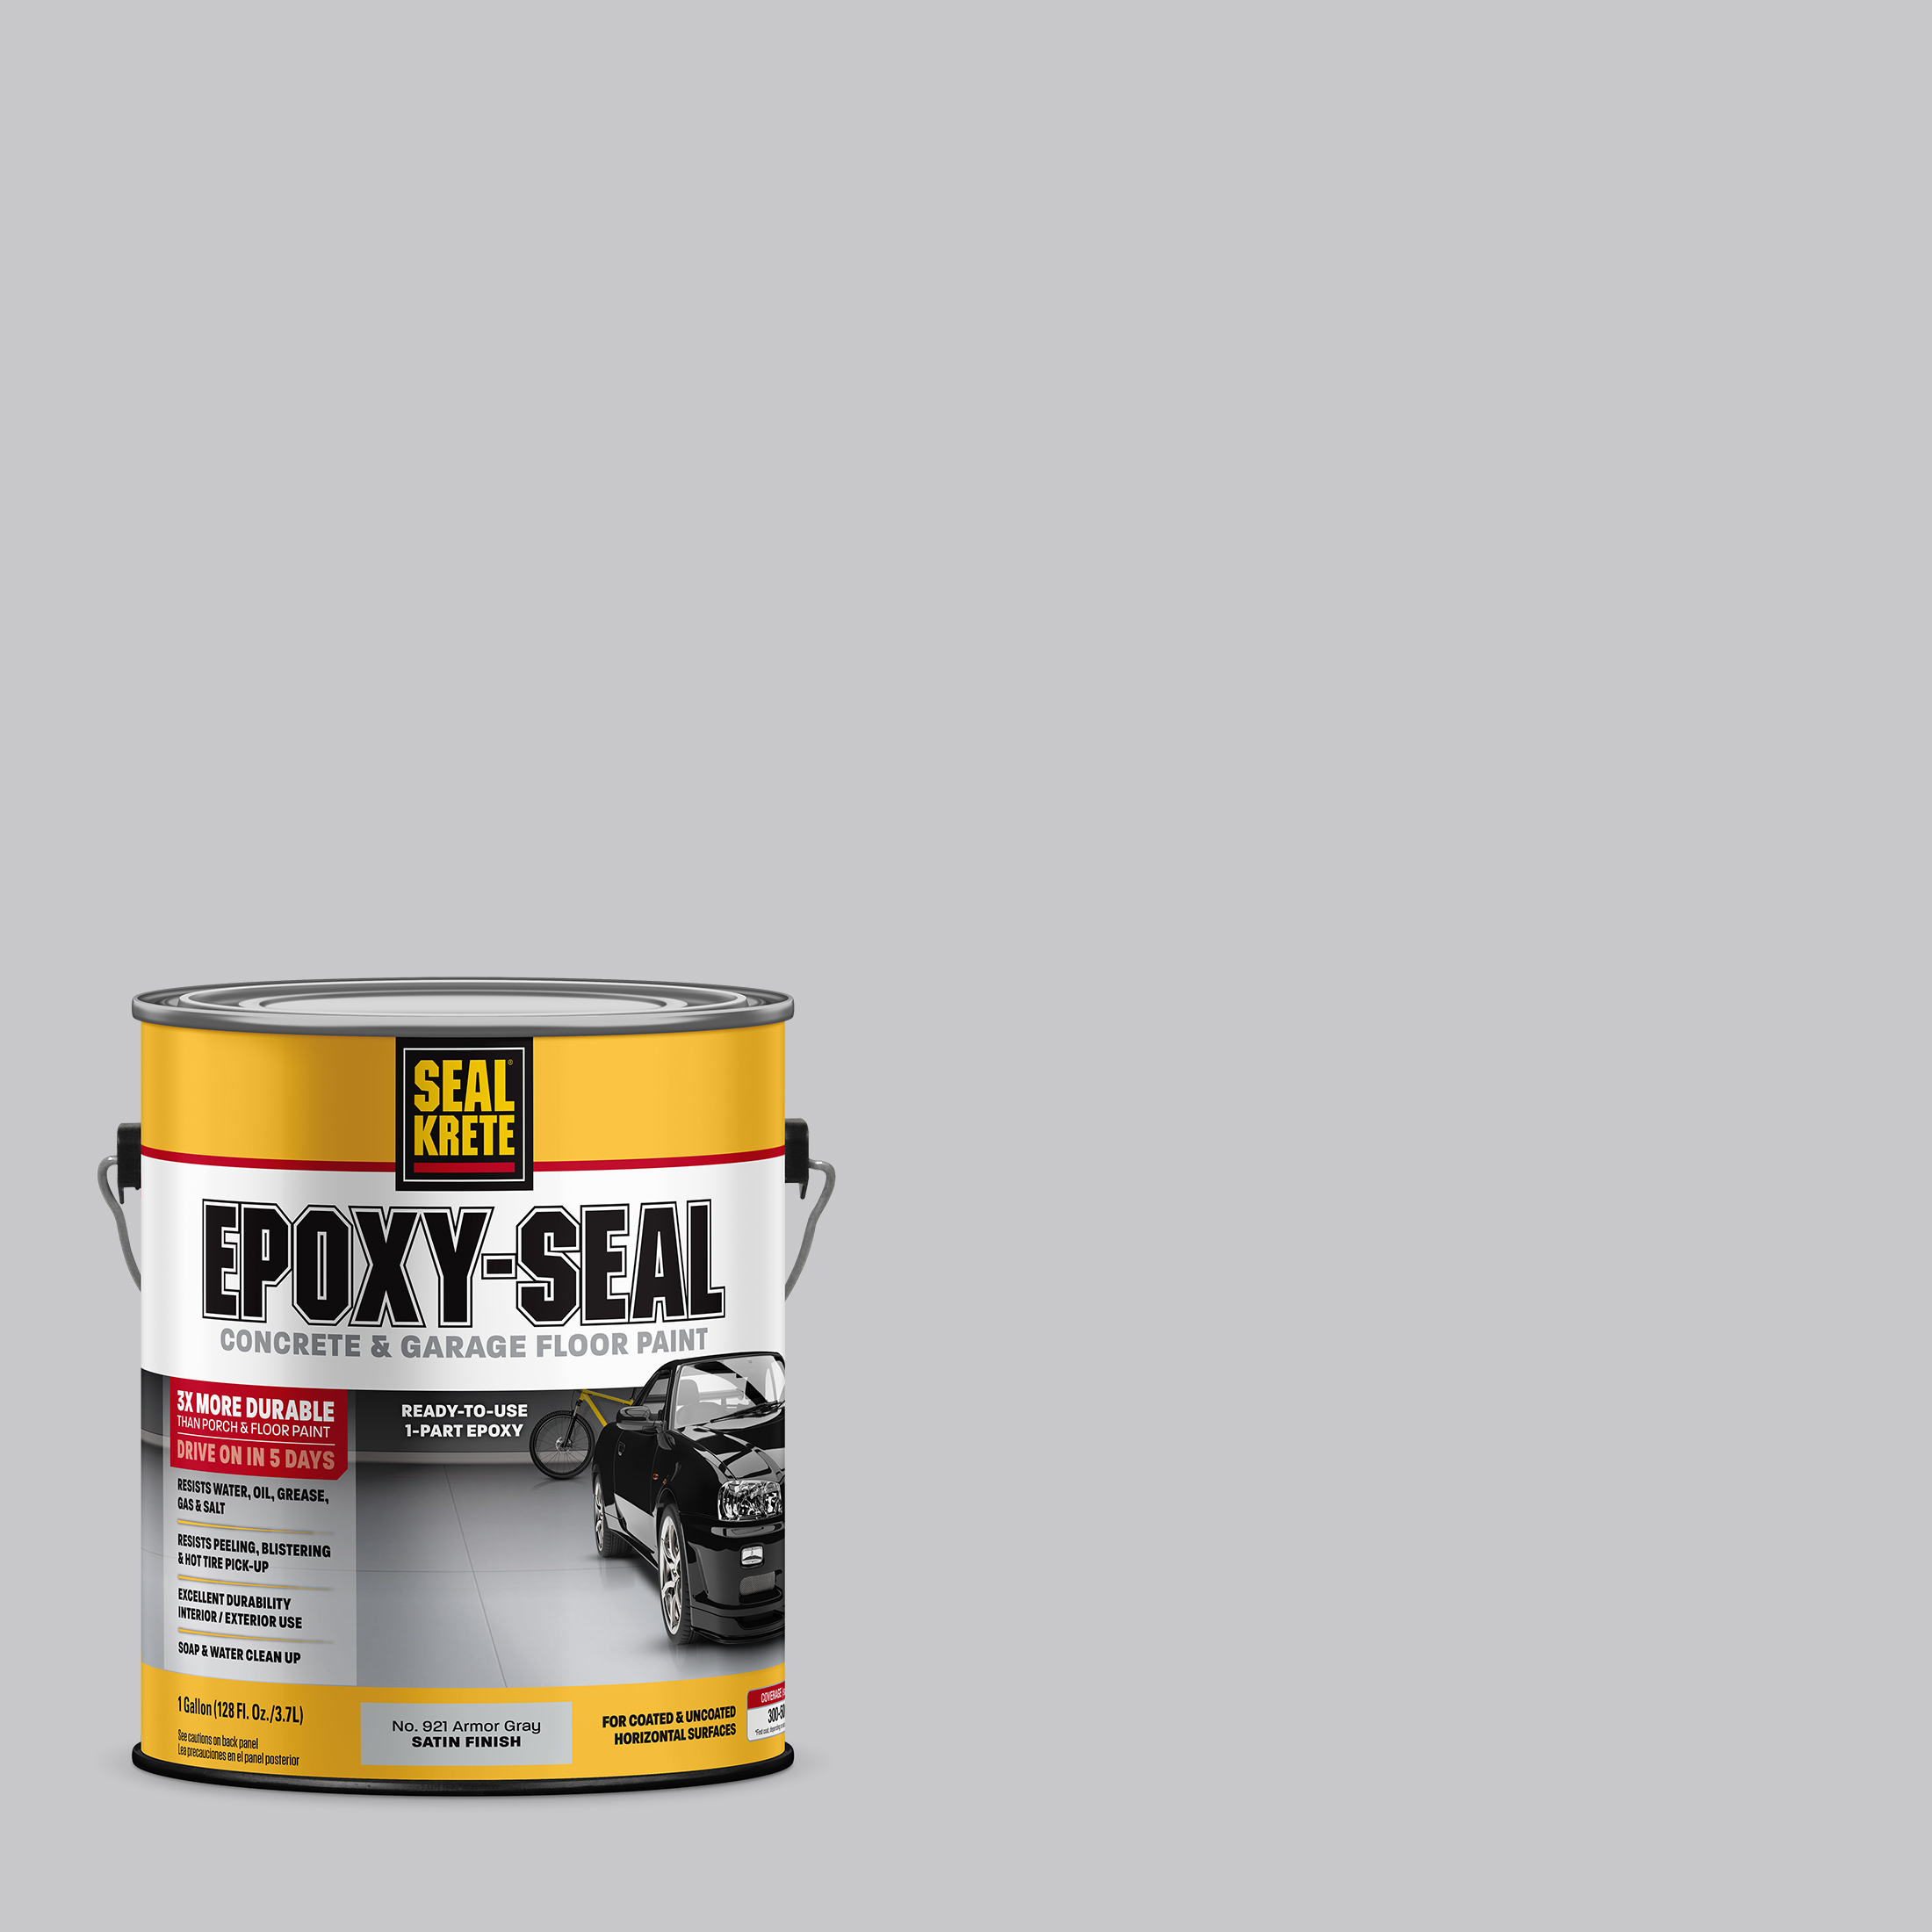 Armor Gray, Seal Krete Epoxy-Seal Low VOC Concrete and Garage Floor Paint-317396, Gallon - image 1 of 8